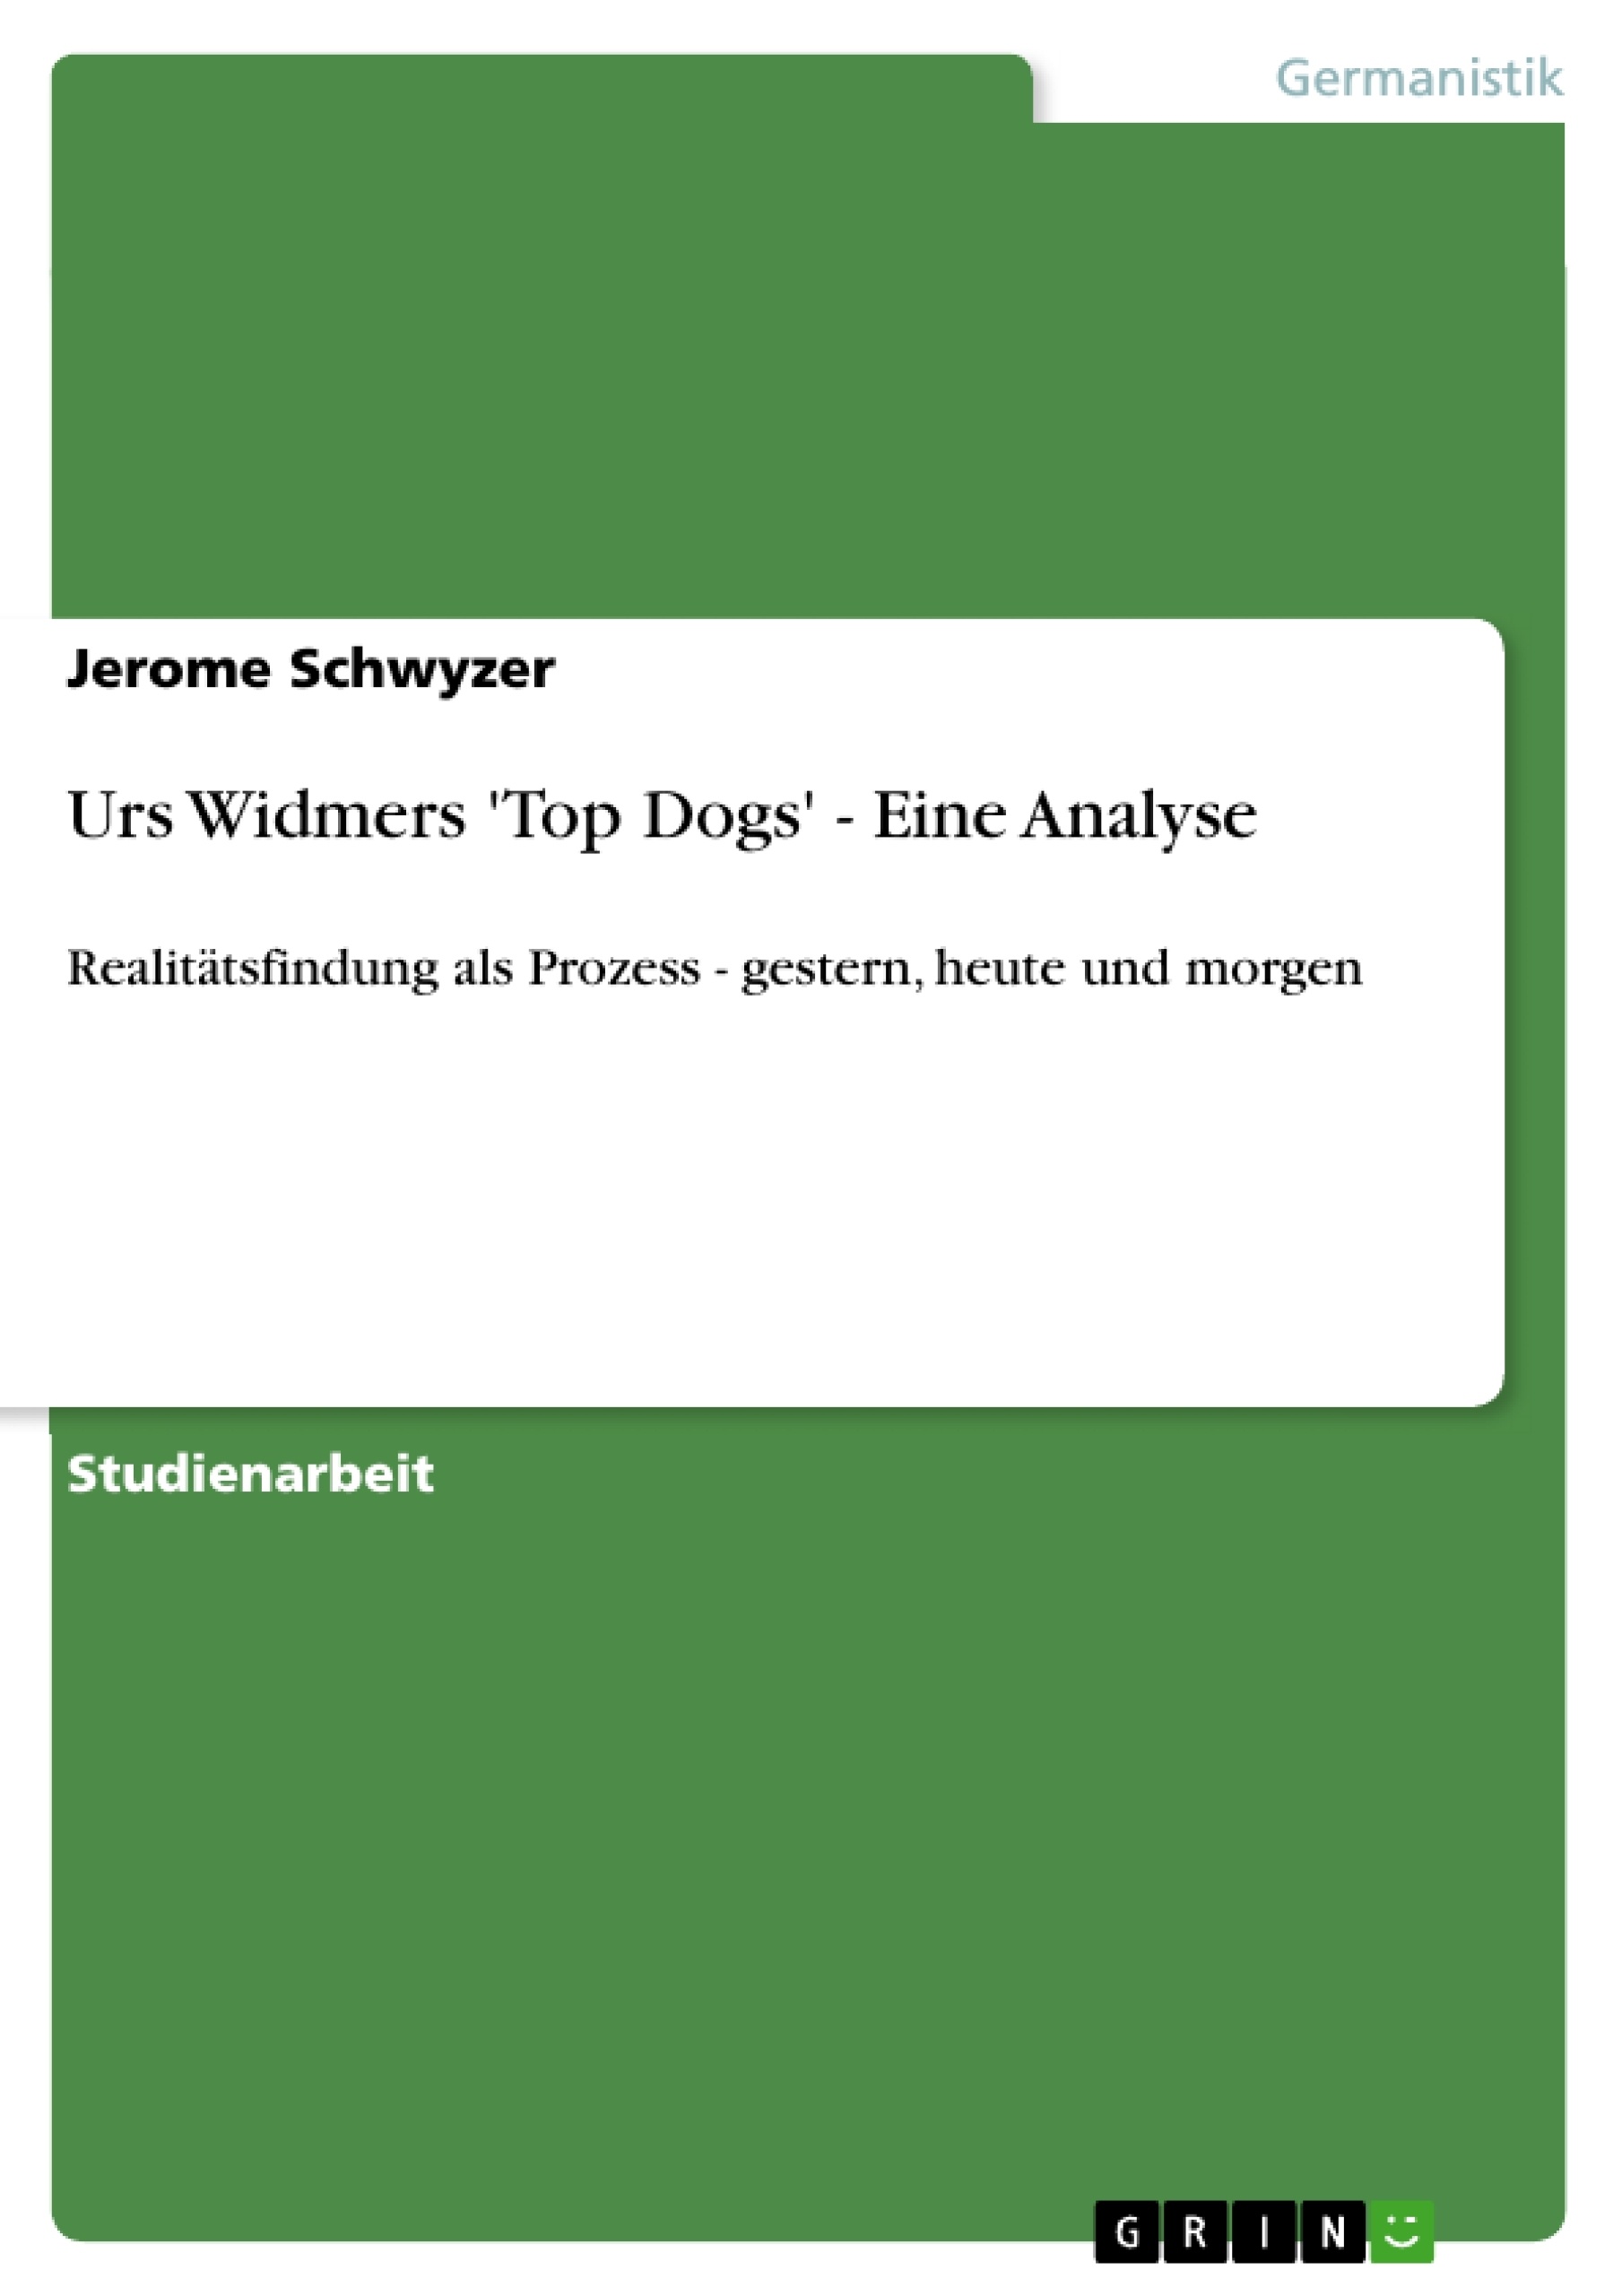 Title: Urs Widmers 'Top Dogs' - Eine Analyse